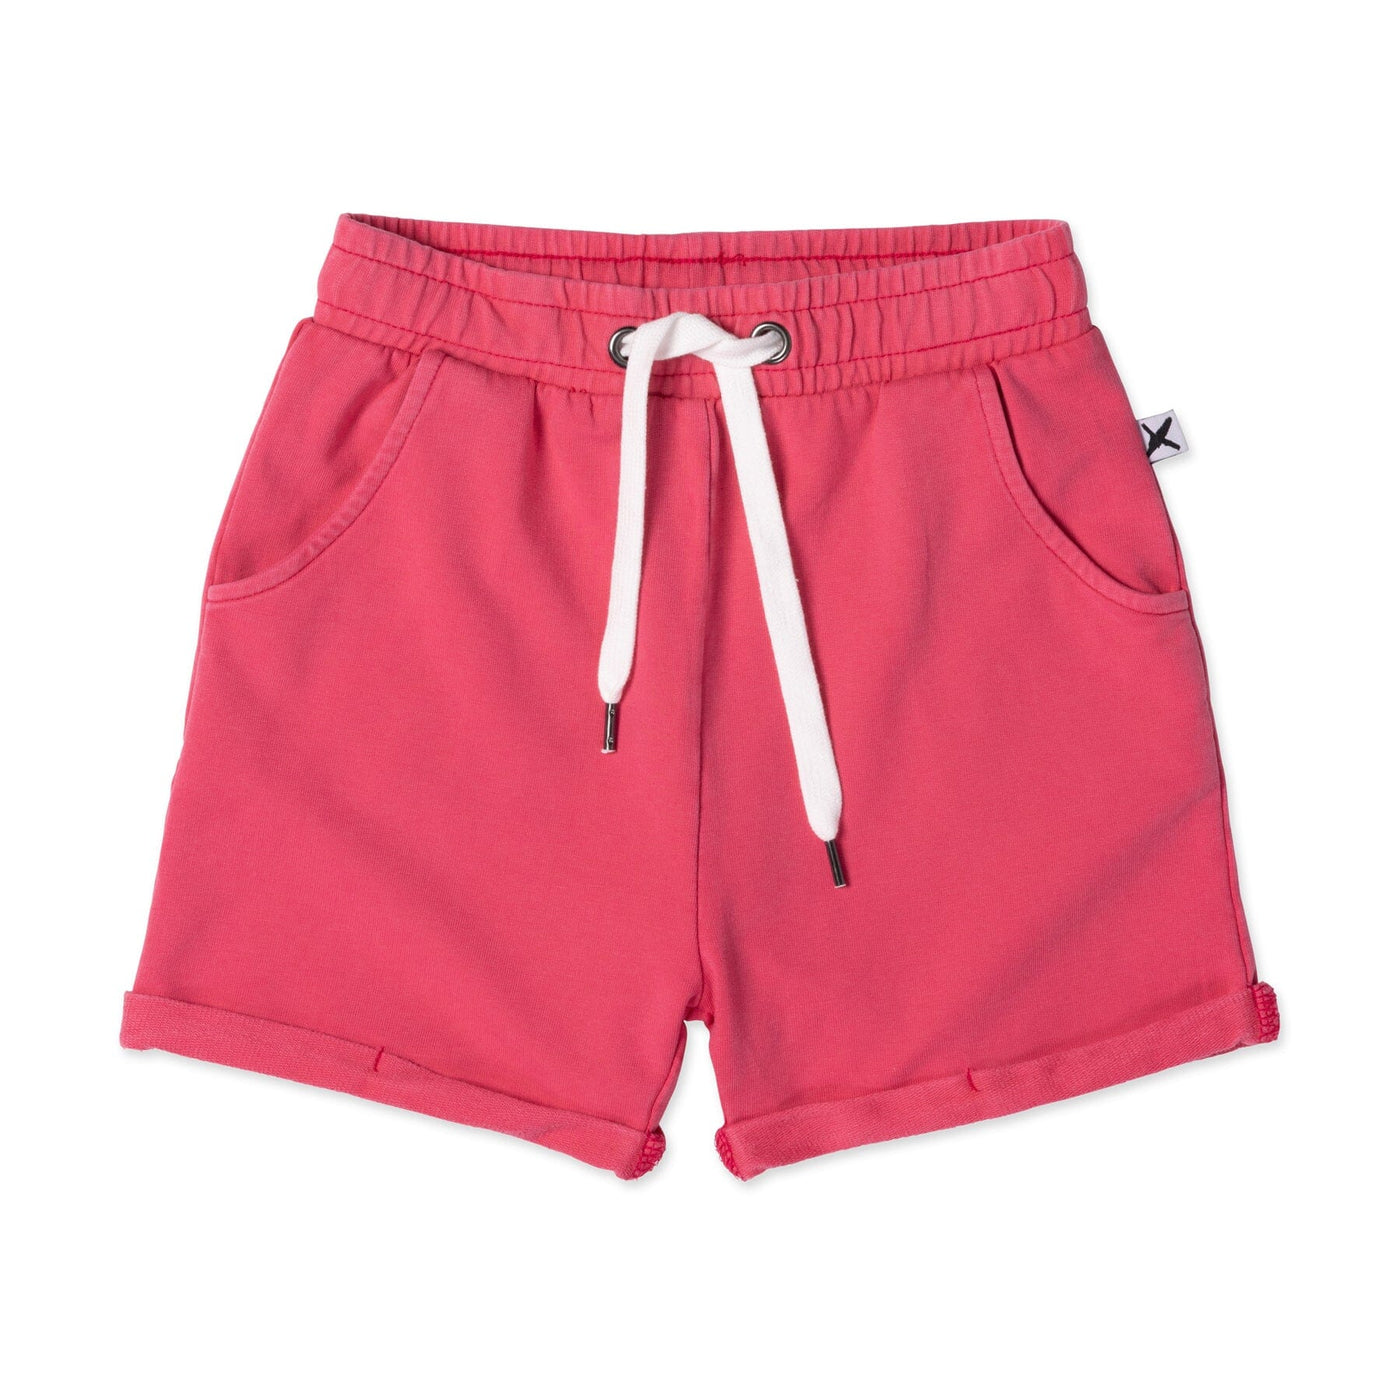 PREORDER Minti Blasted Track Short - Pink Wash Shorts Minti 